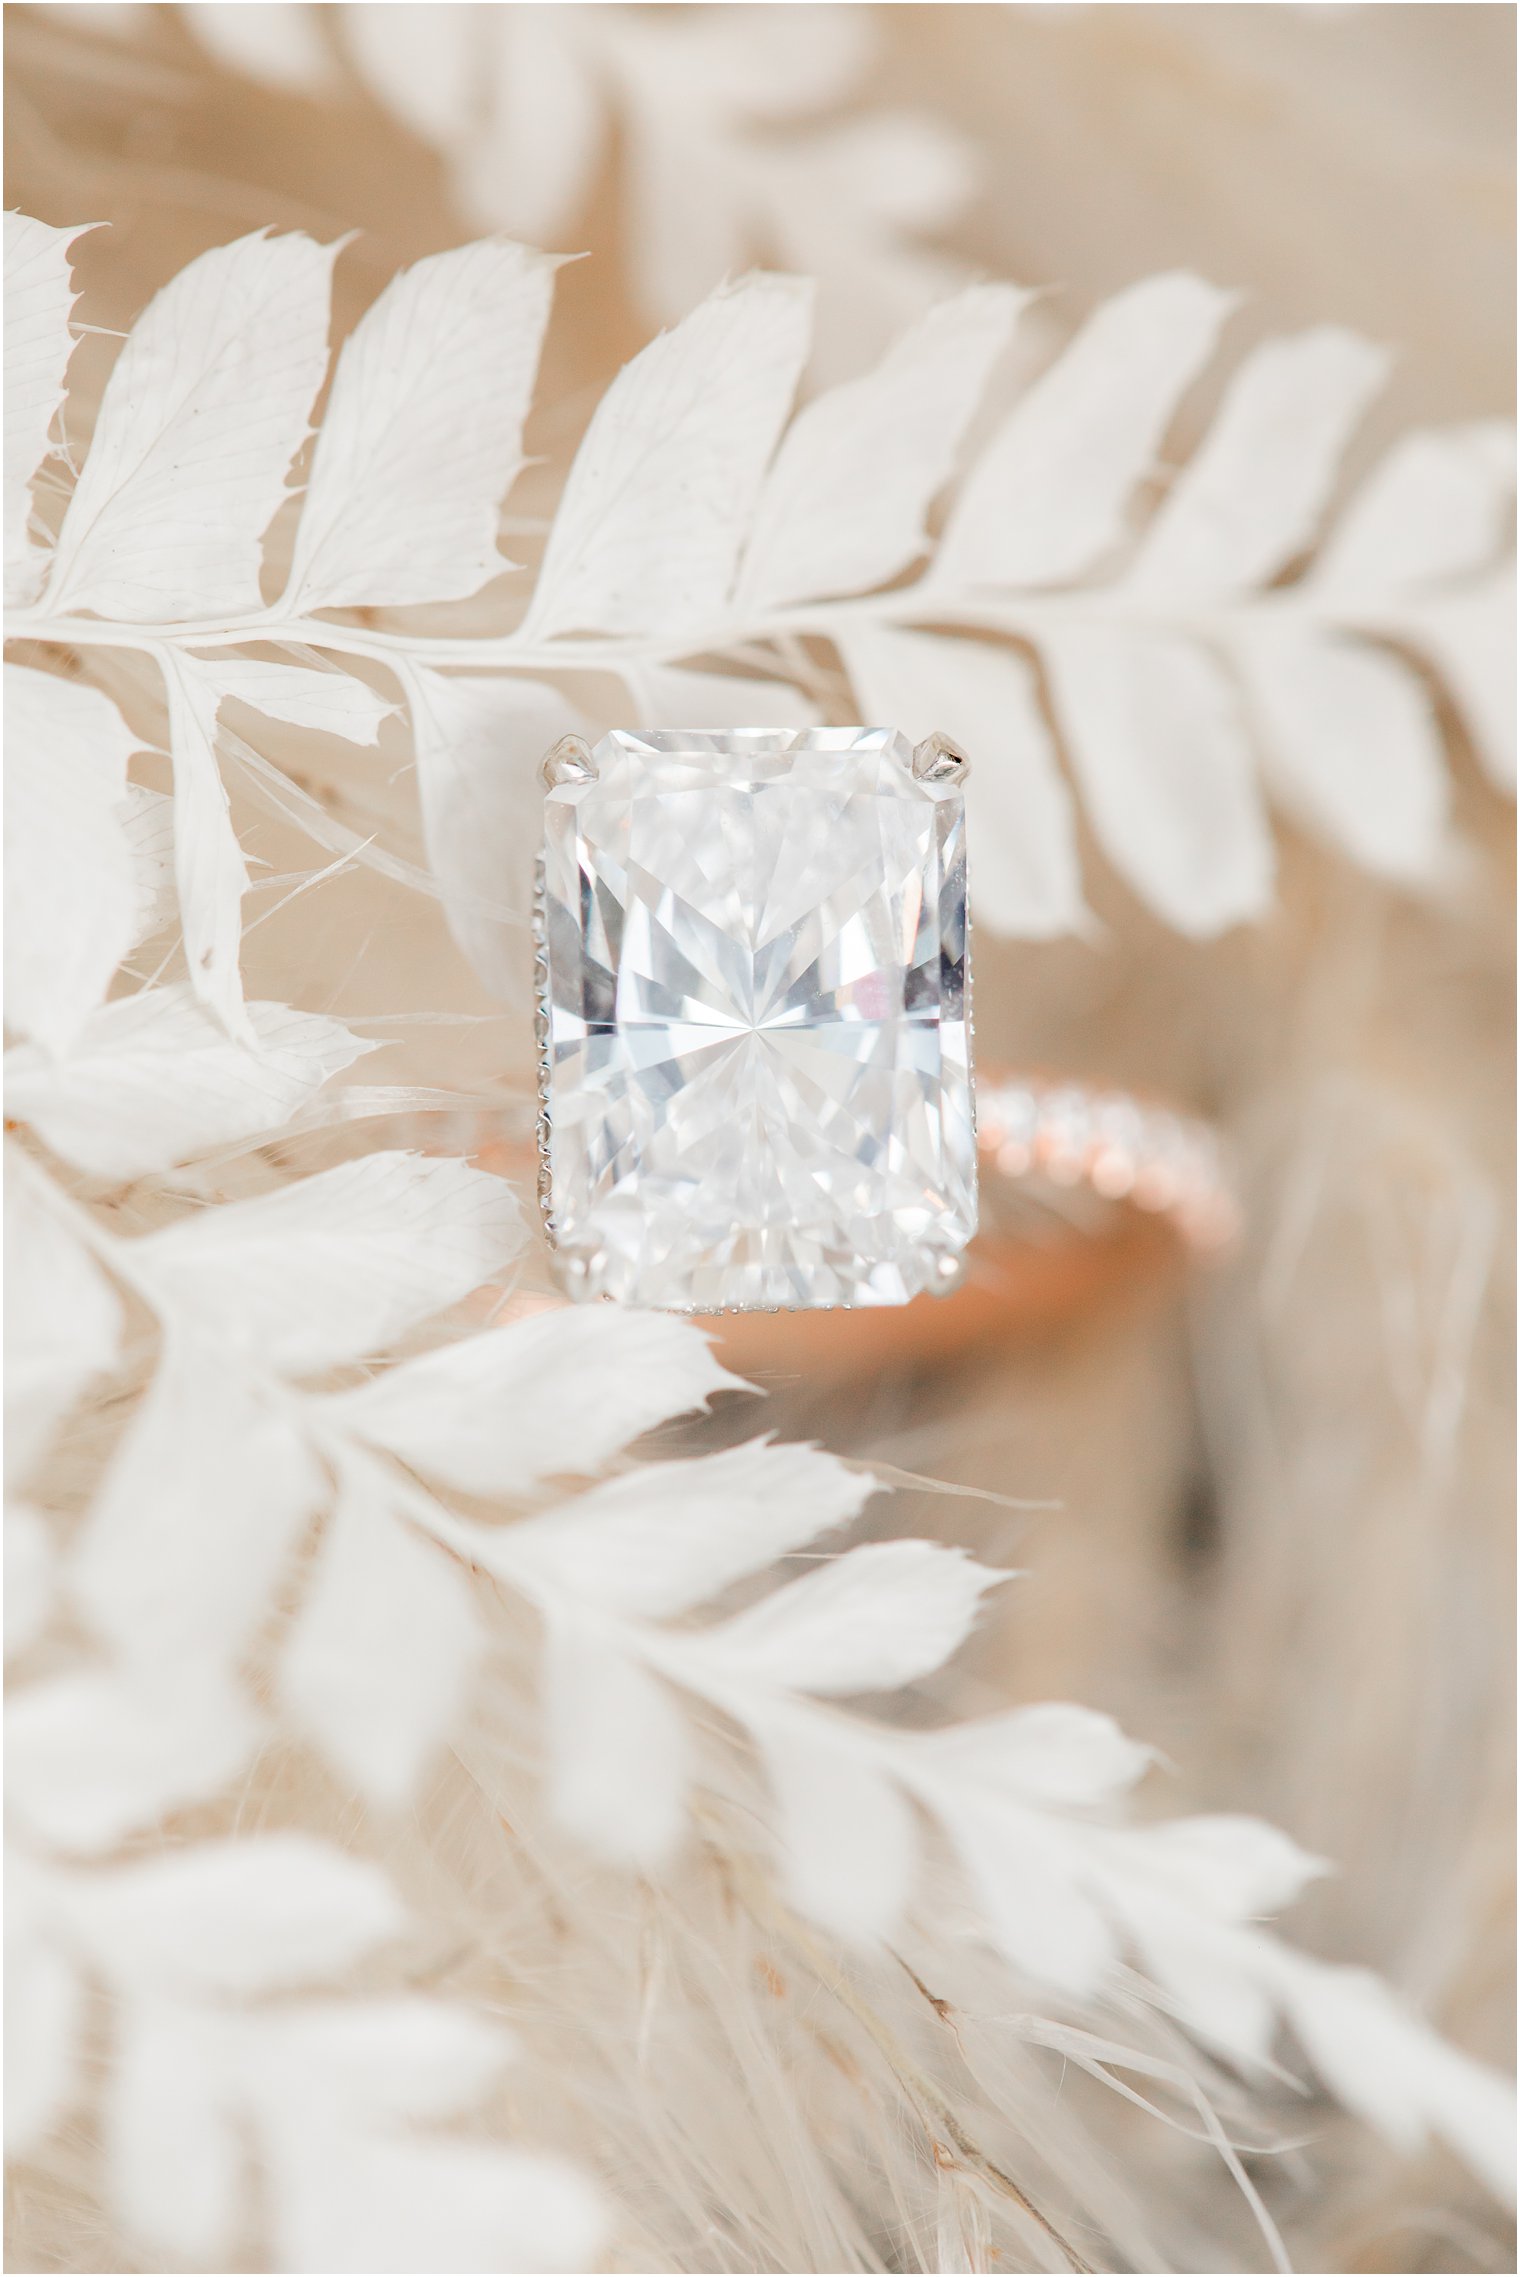 rectangular diamond ring sits on white flowers